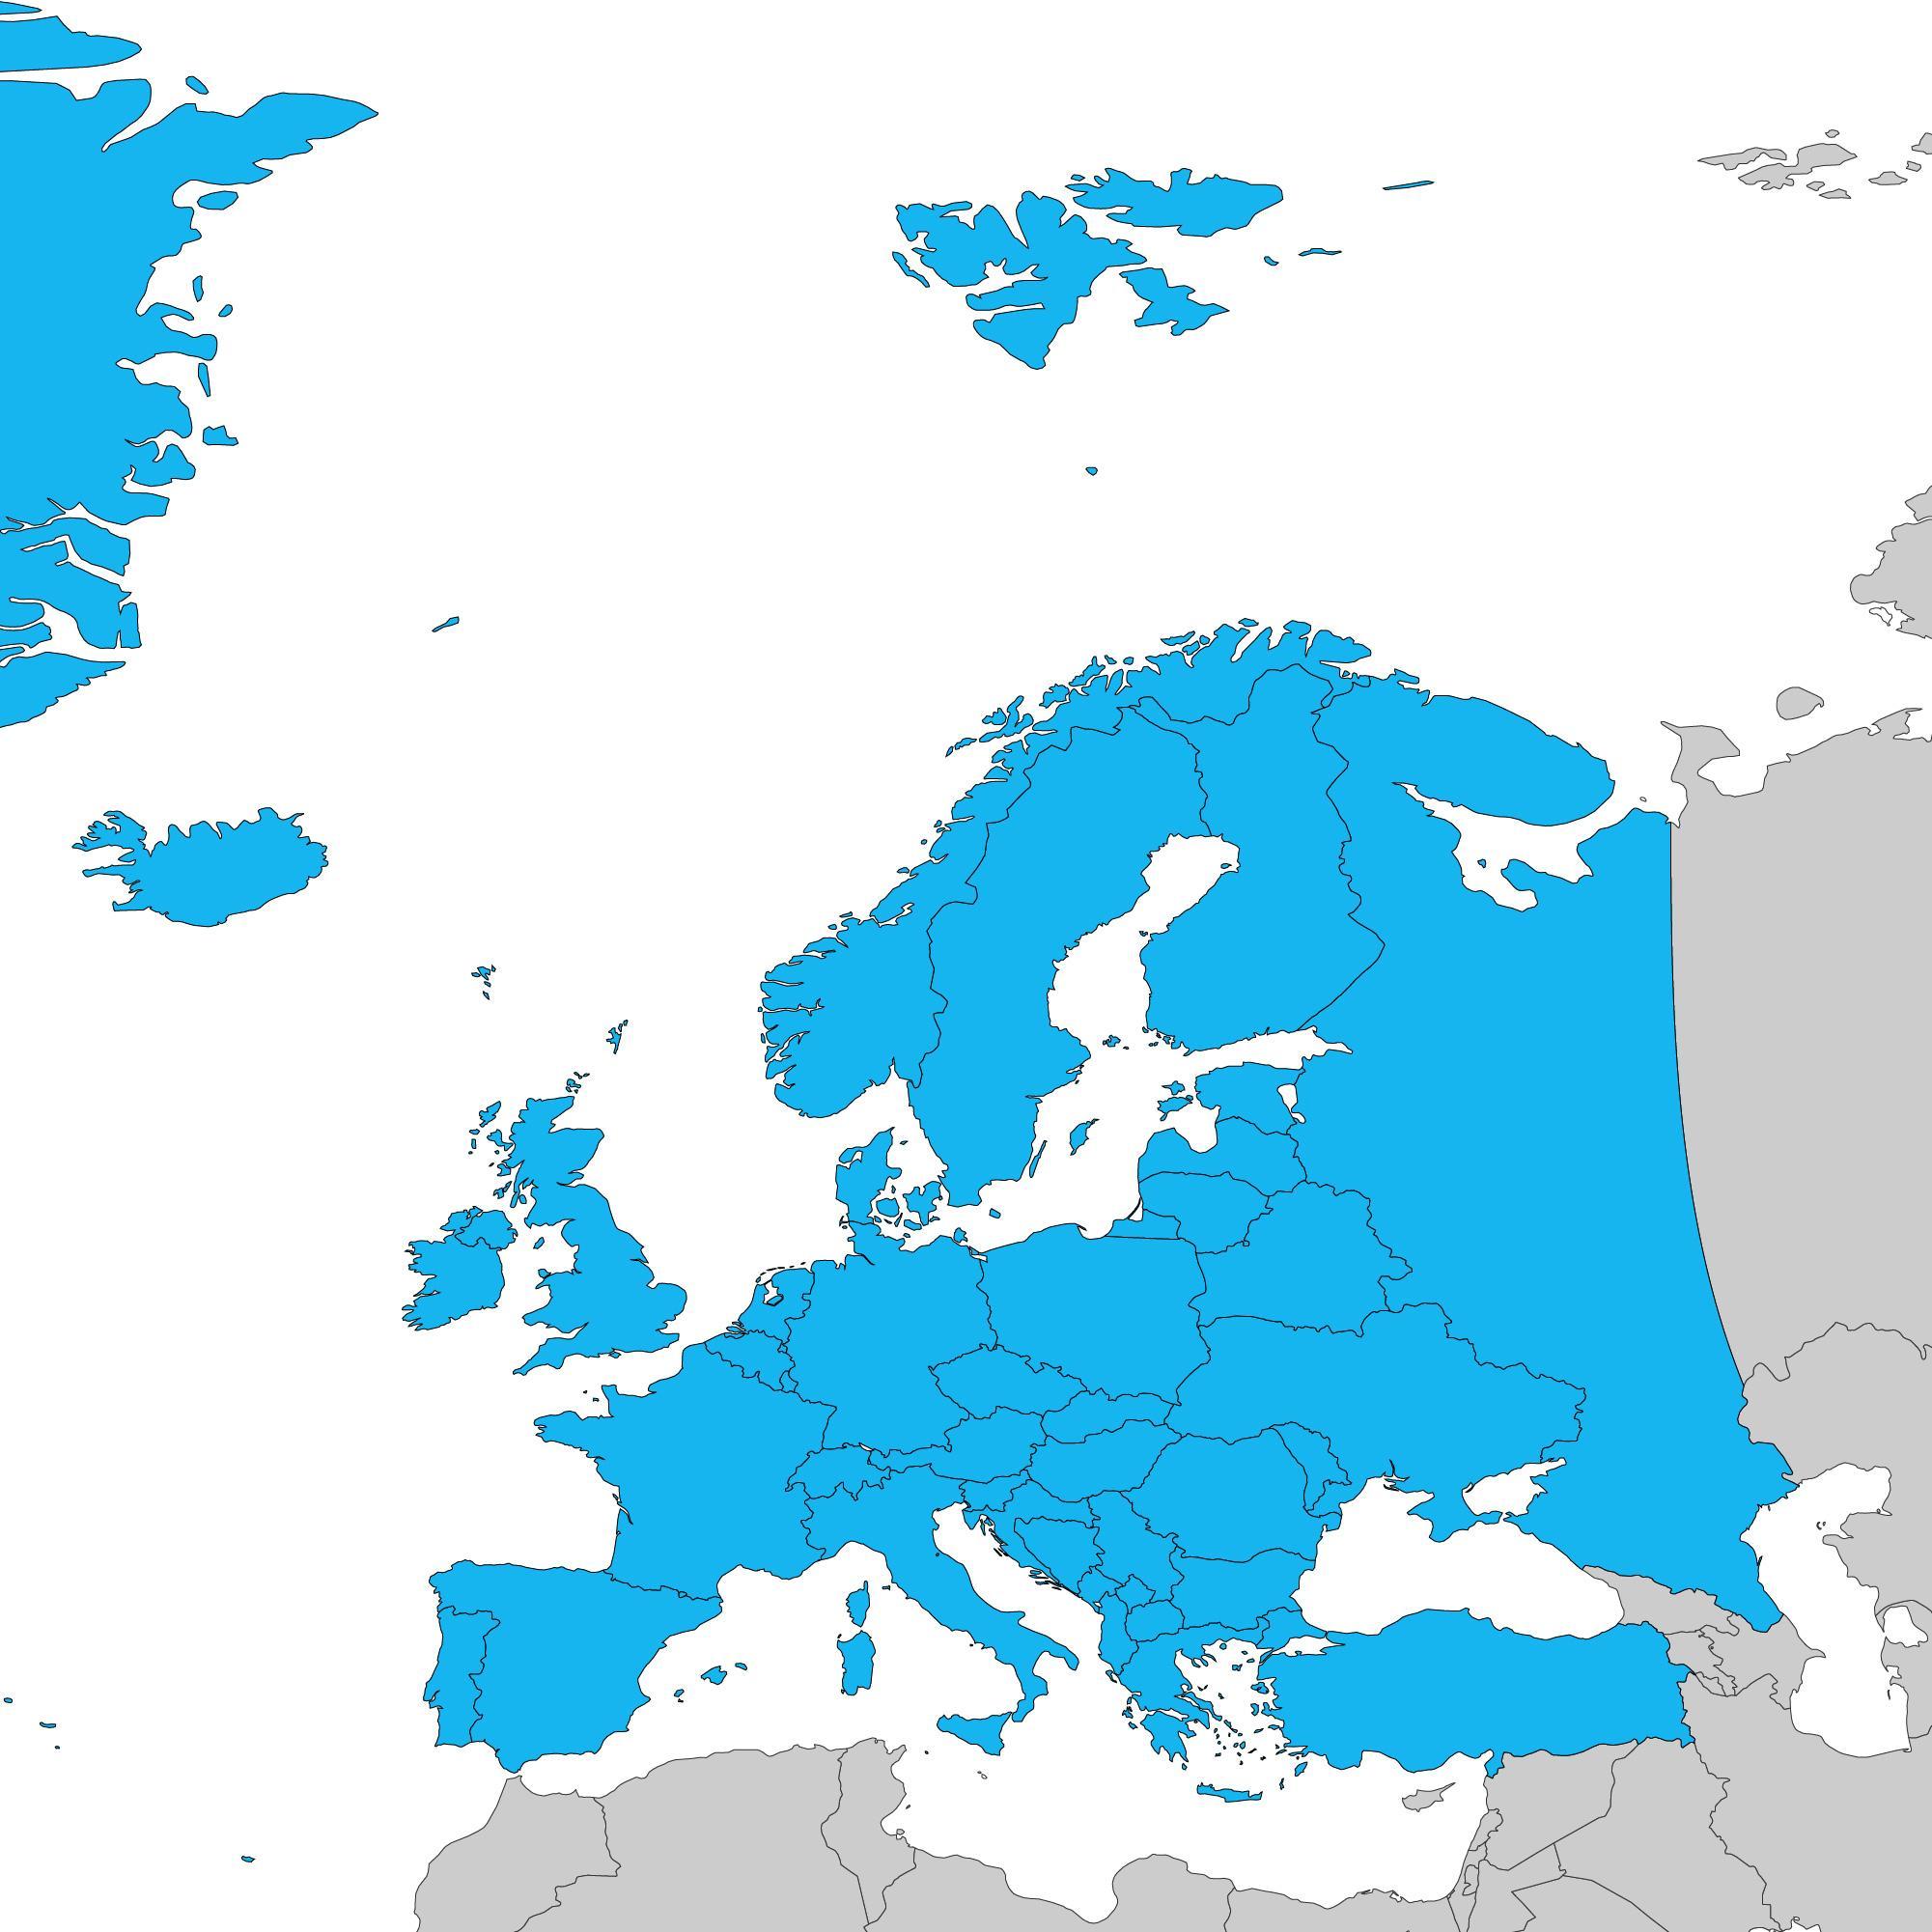 Europe Region (EUR)